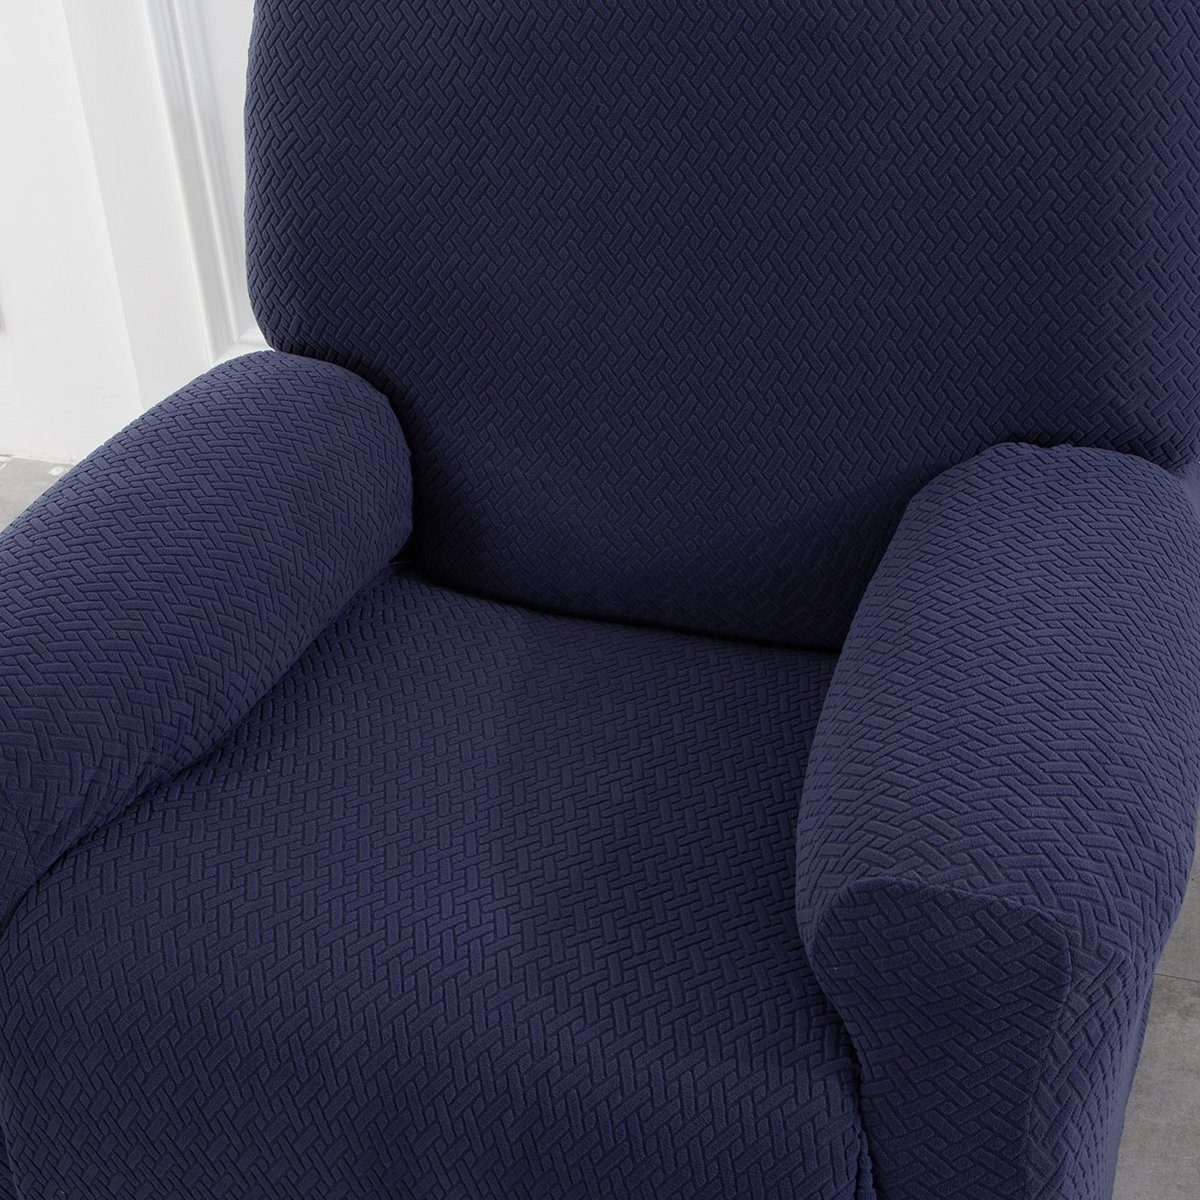 Rosnek, für Sesselhusse Sessel, Strukturoptik mit Komplett Stretchhusse, Blau Relaxsessel Sesselbezug Liege